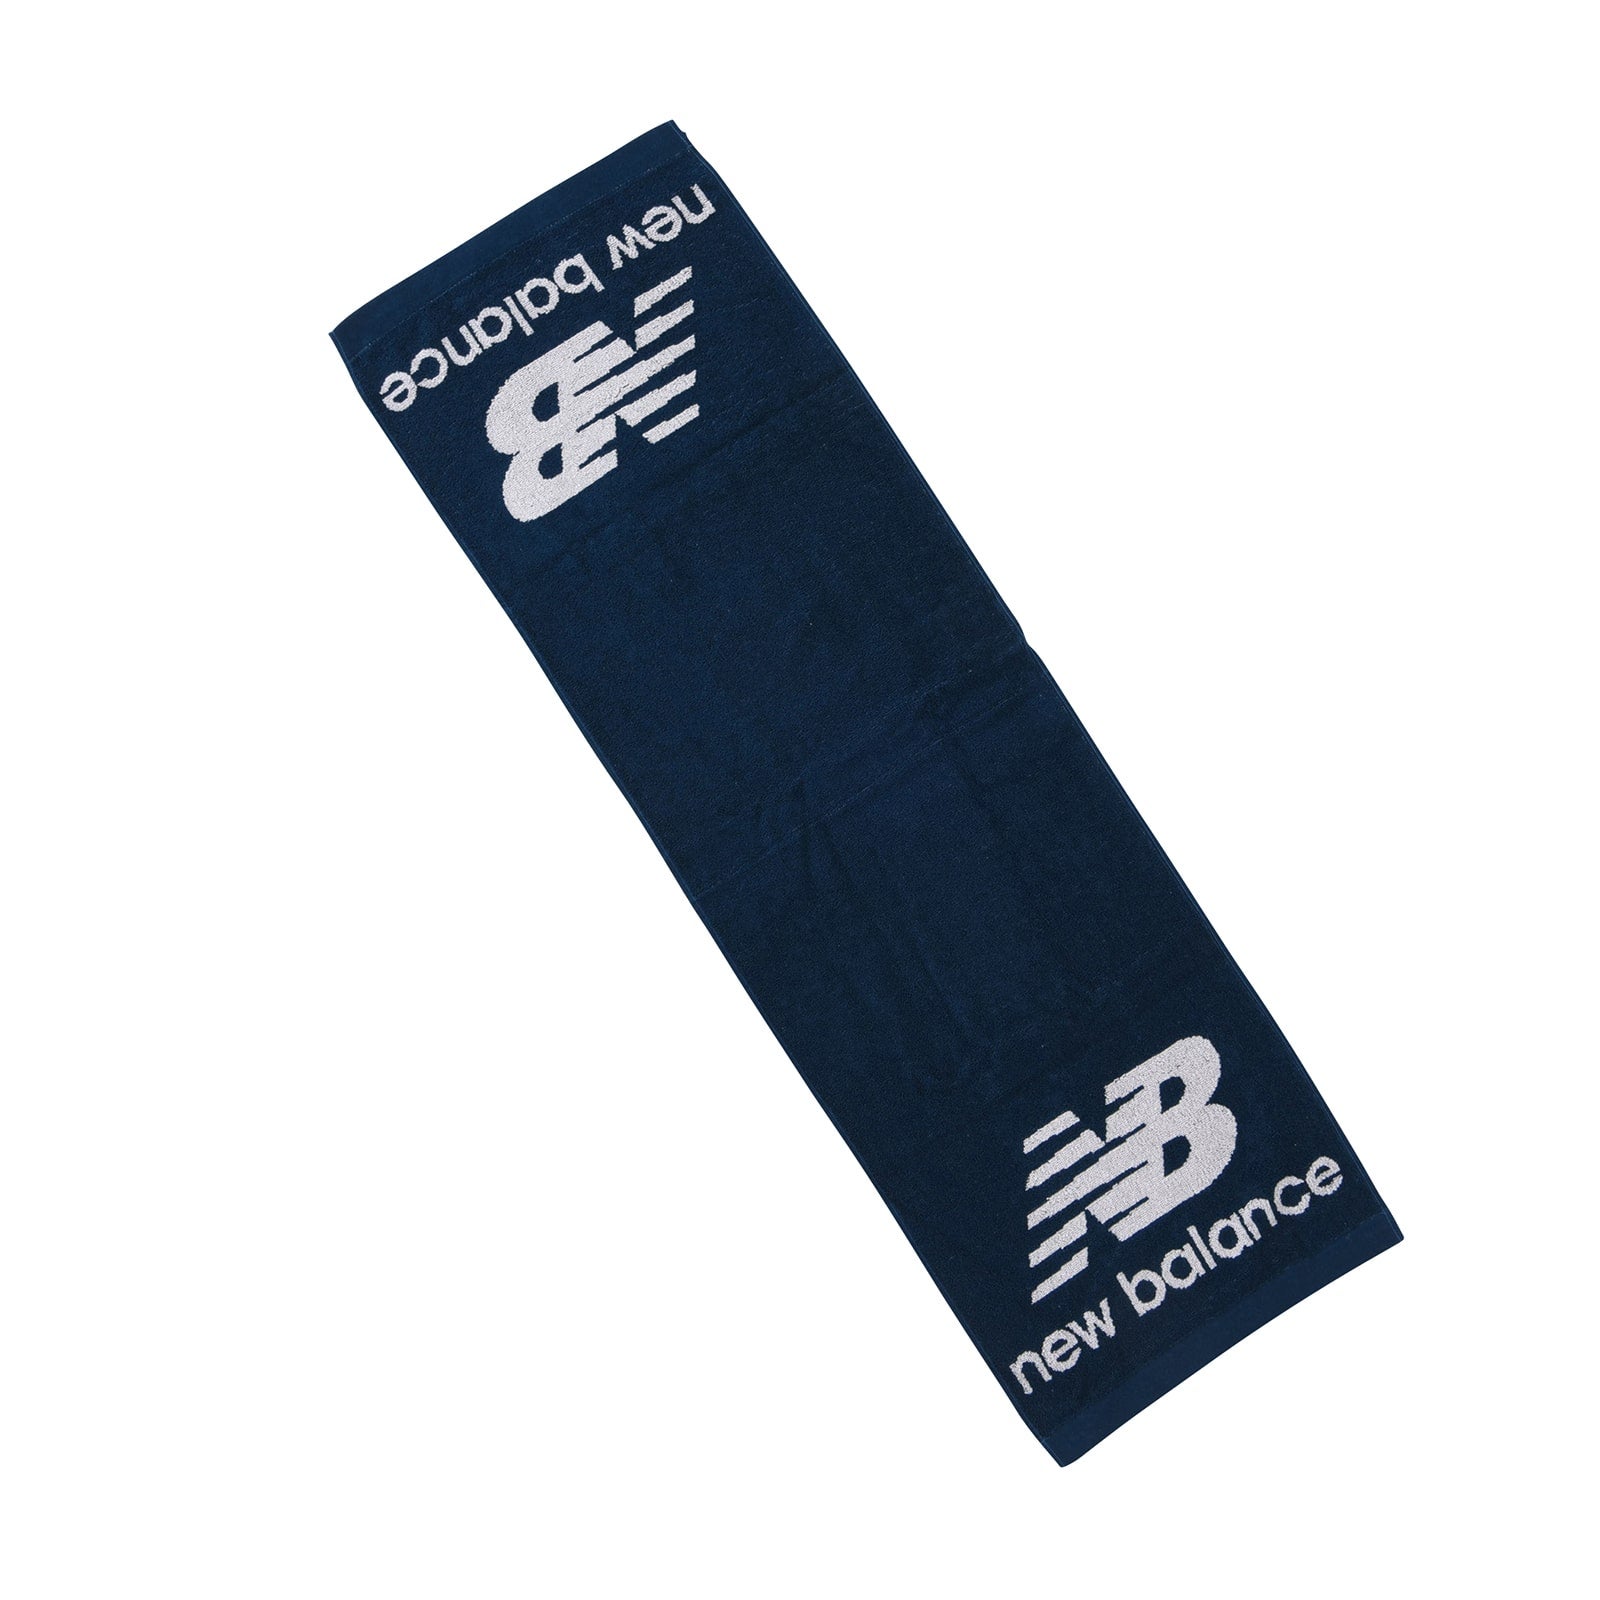 NB jacquard sports towel logo mark